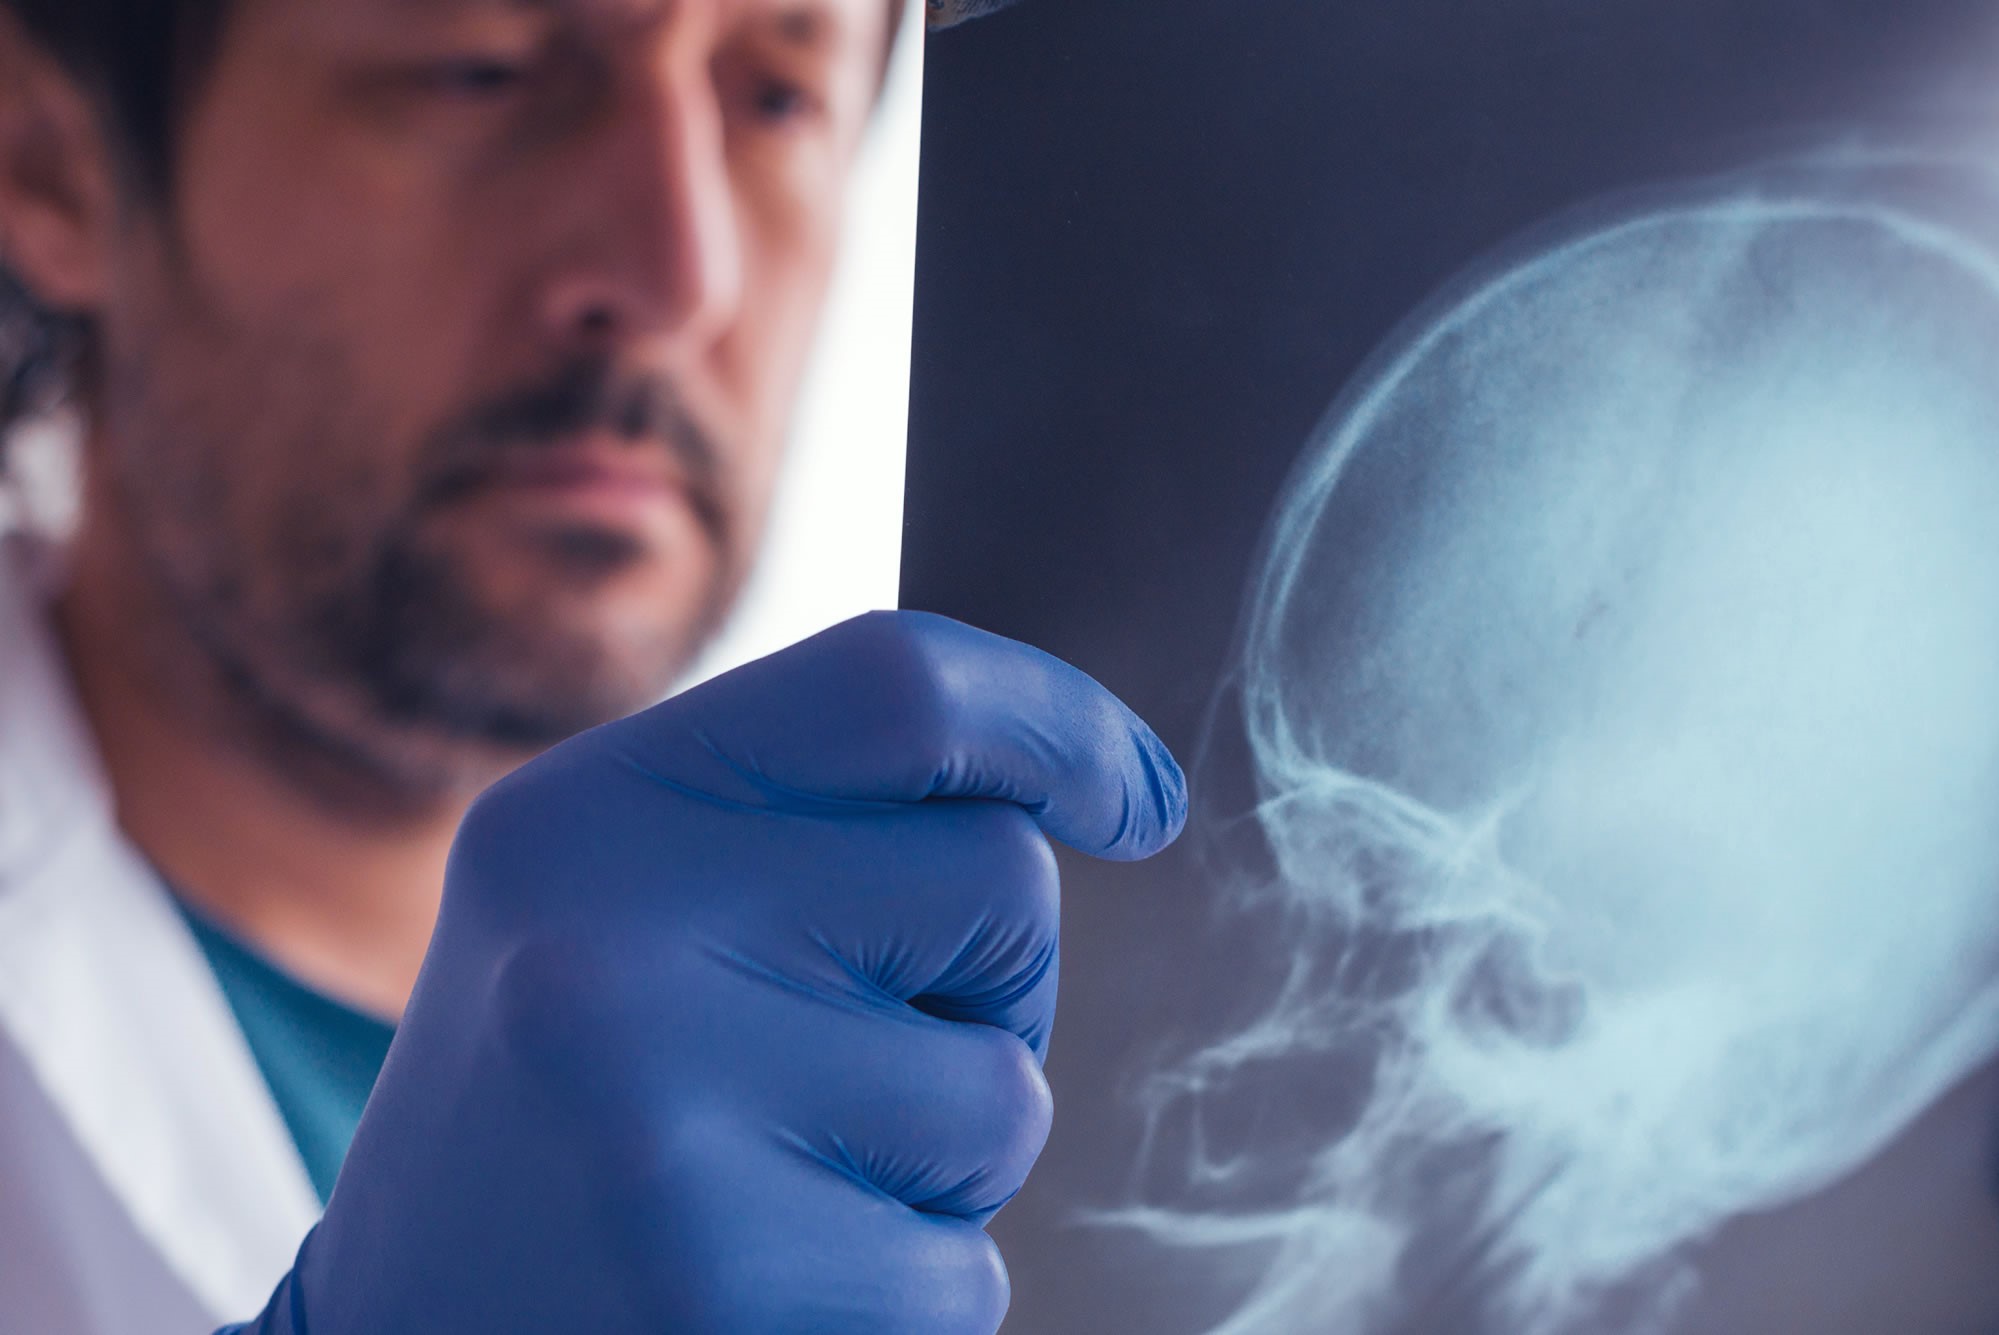 examining x-ray of skull - brain/head injury claim compensation Birmingham